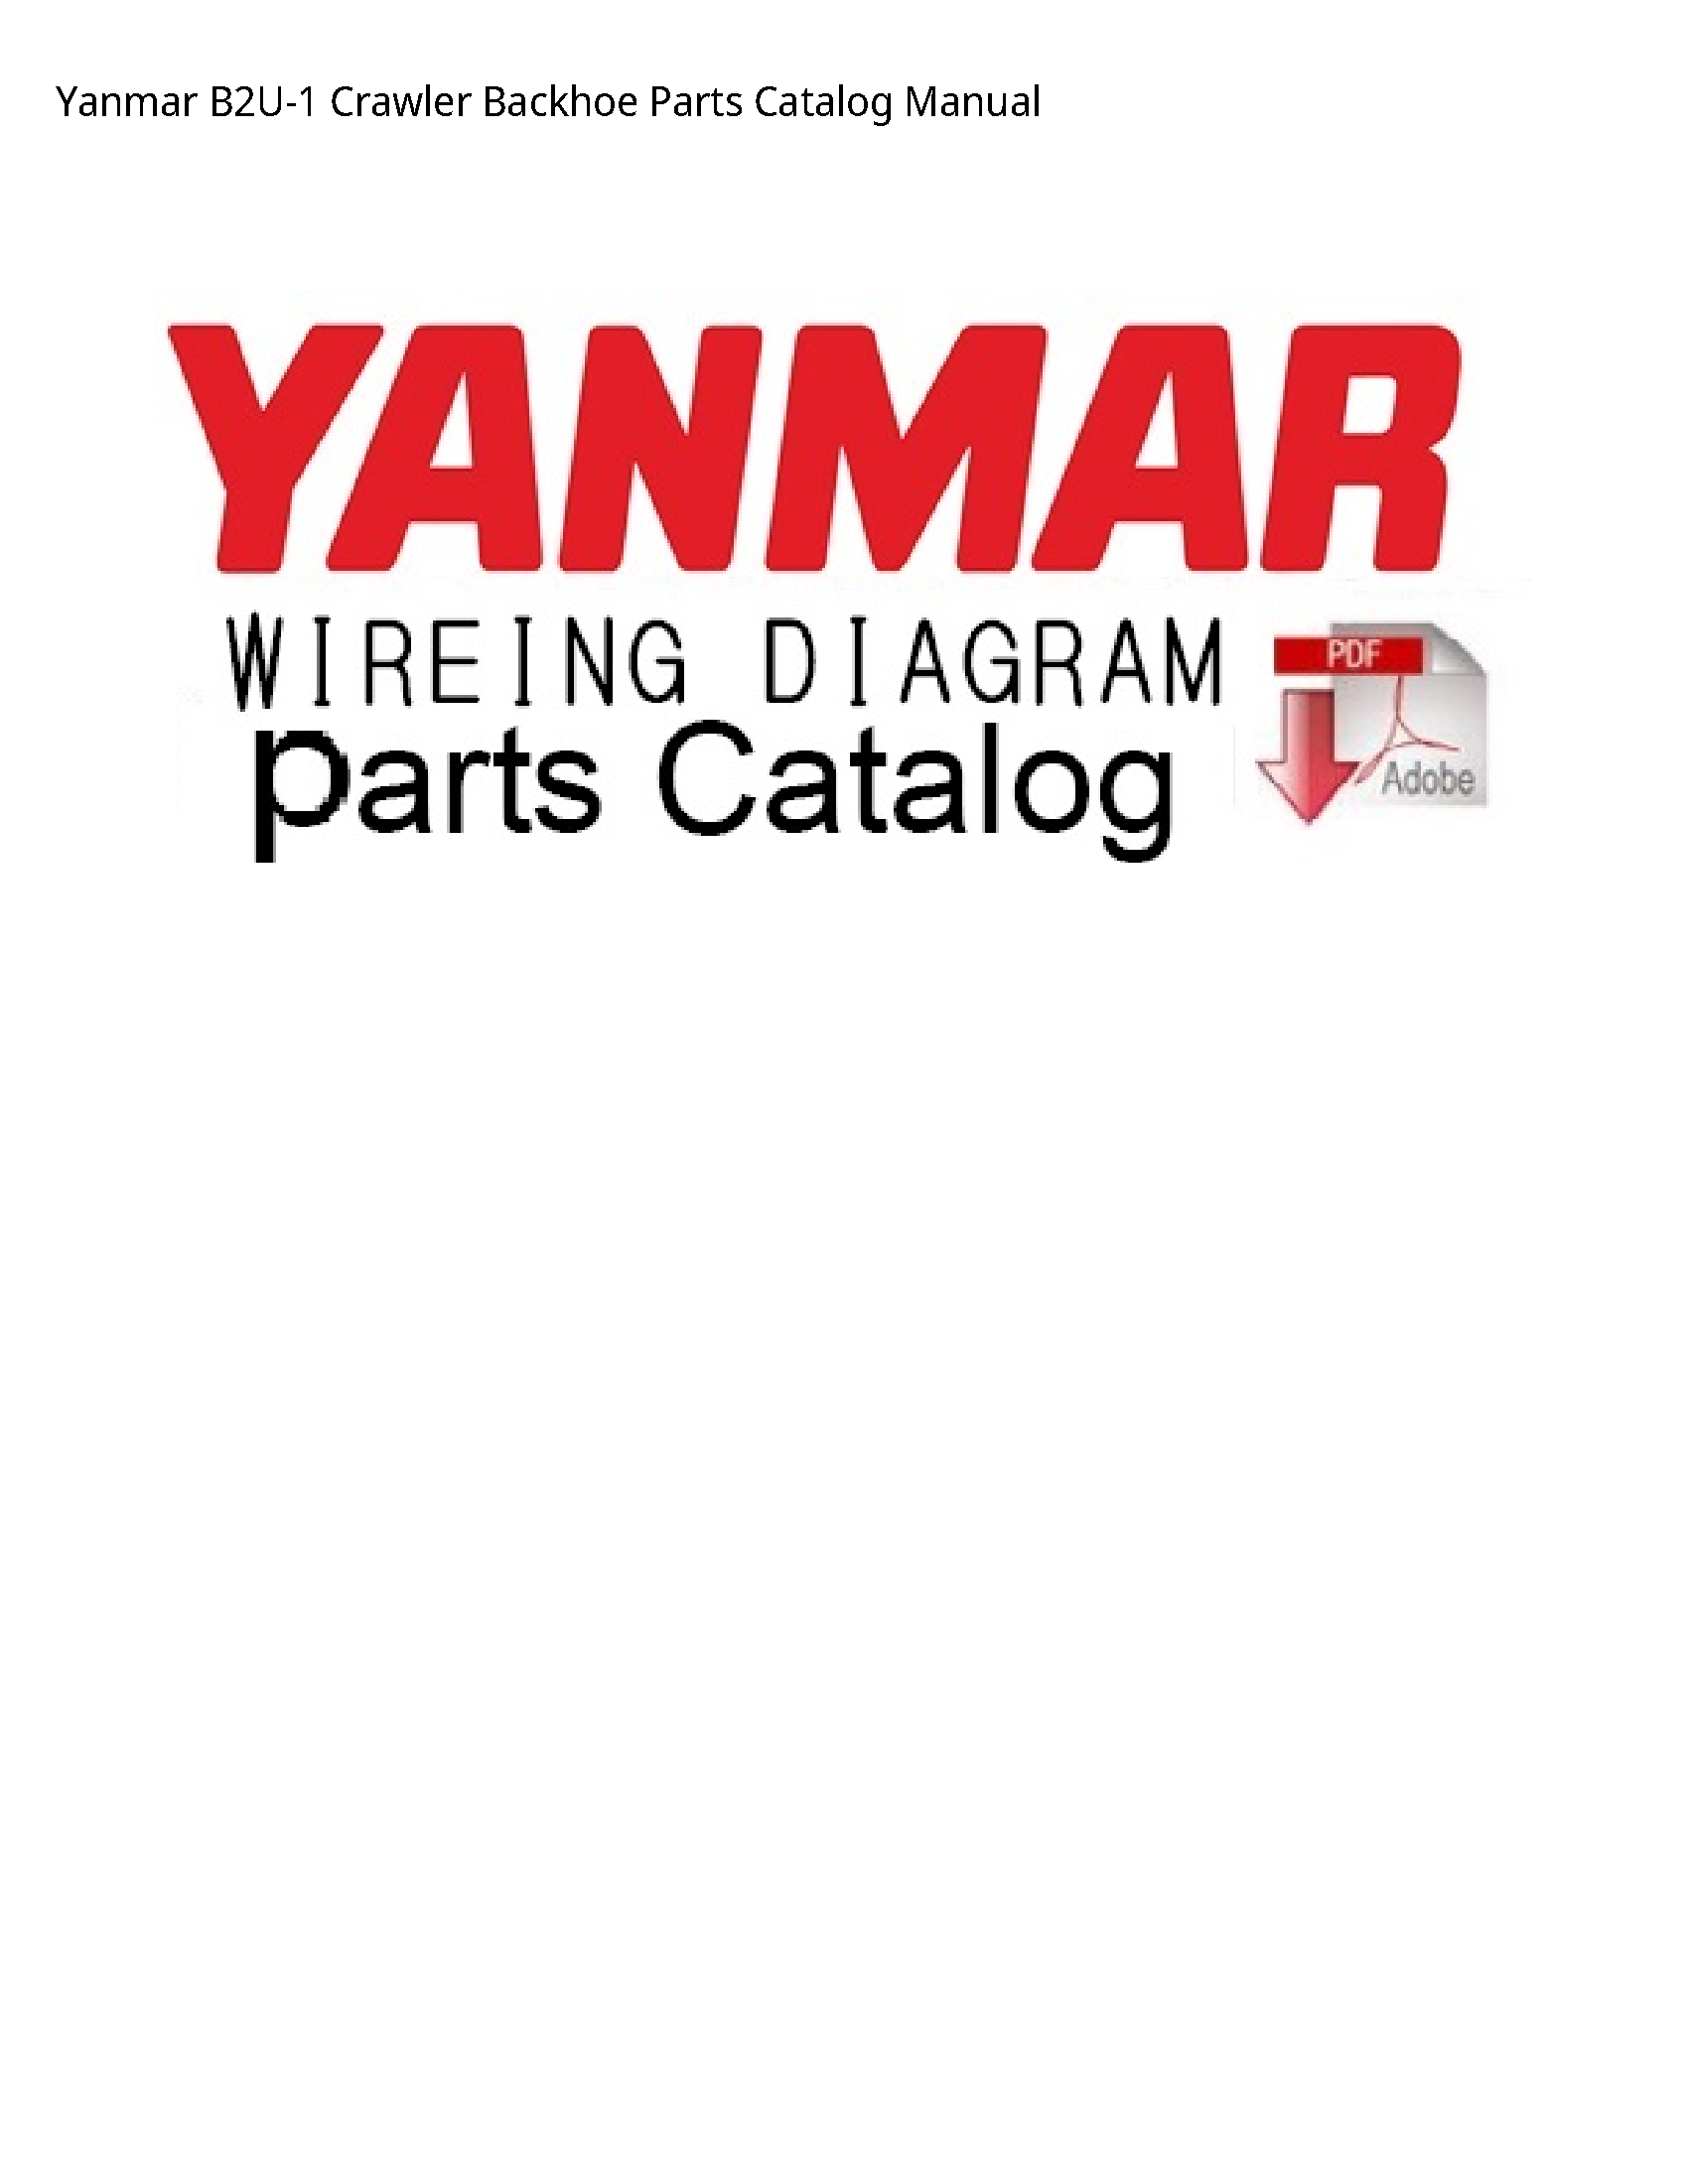 Yanmar B2U-1 Crawler Backhoe Parts Catalog manual